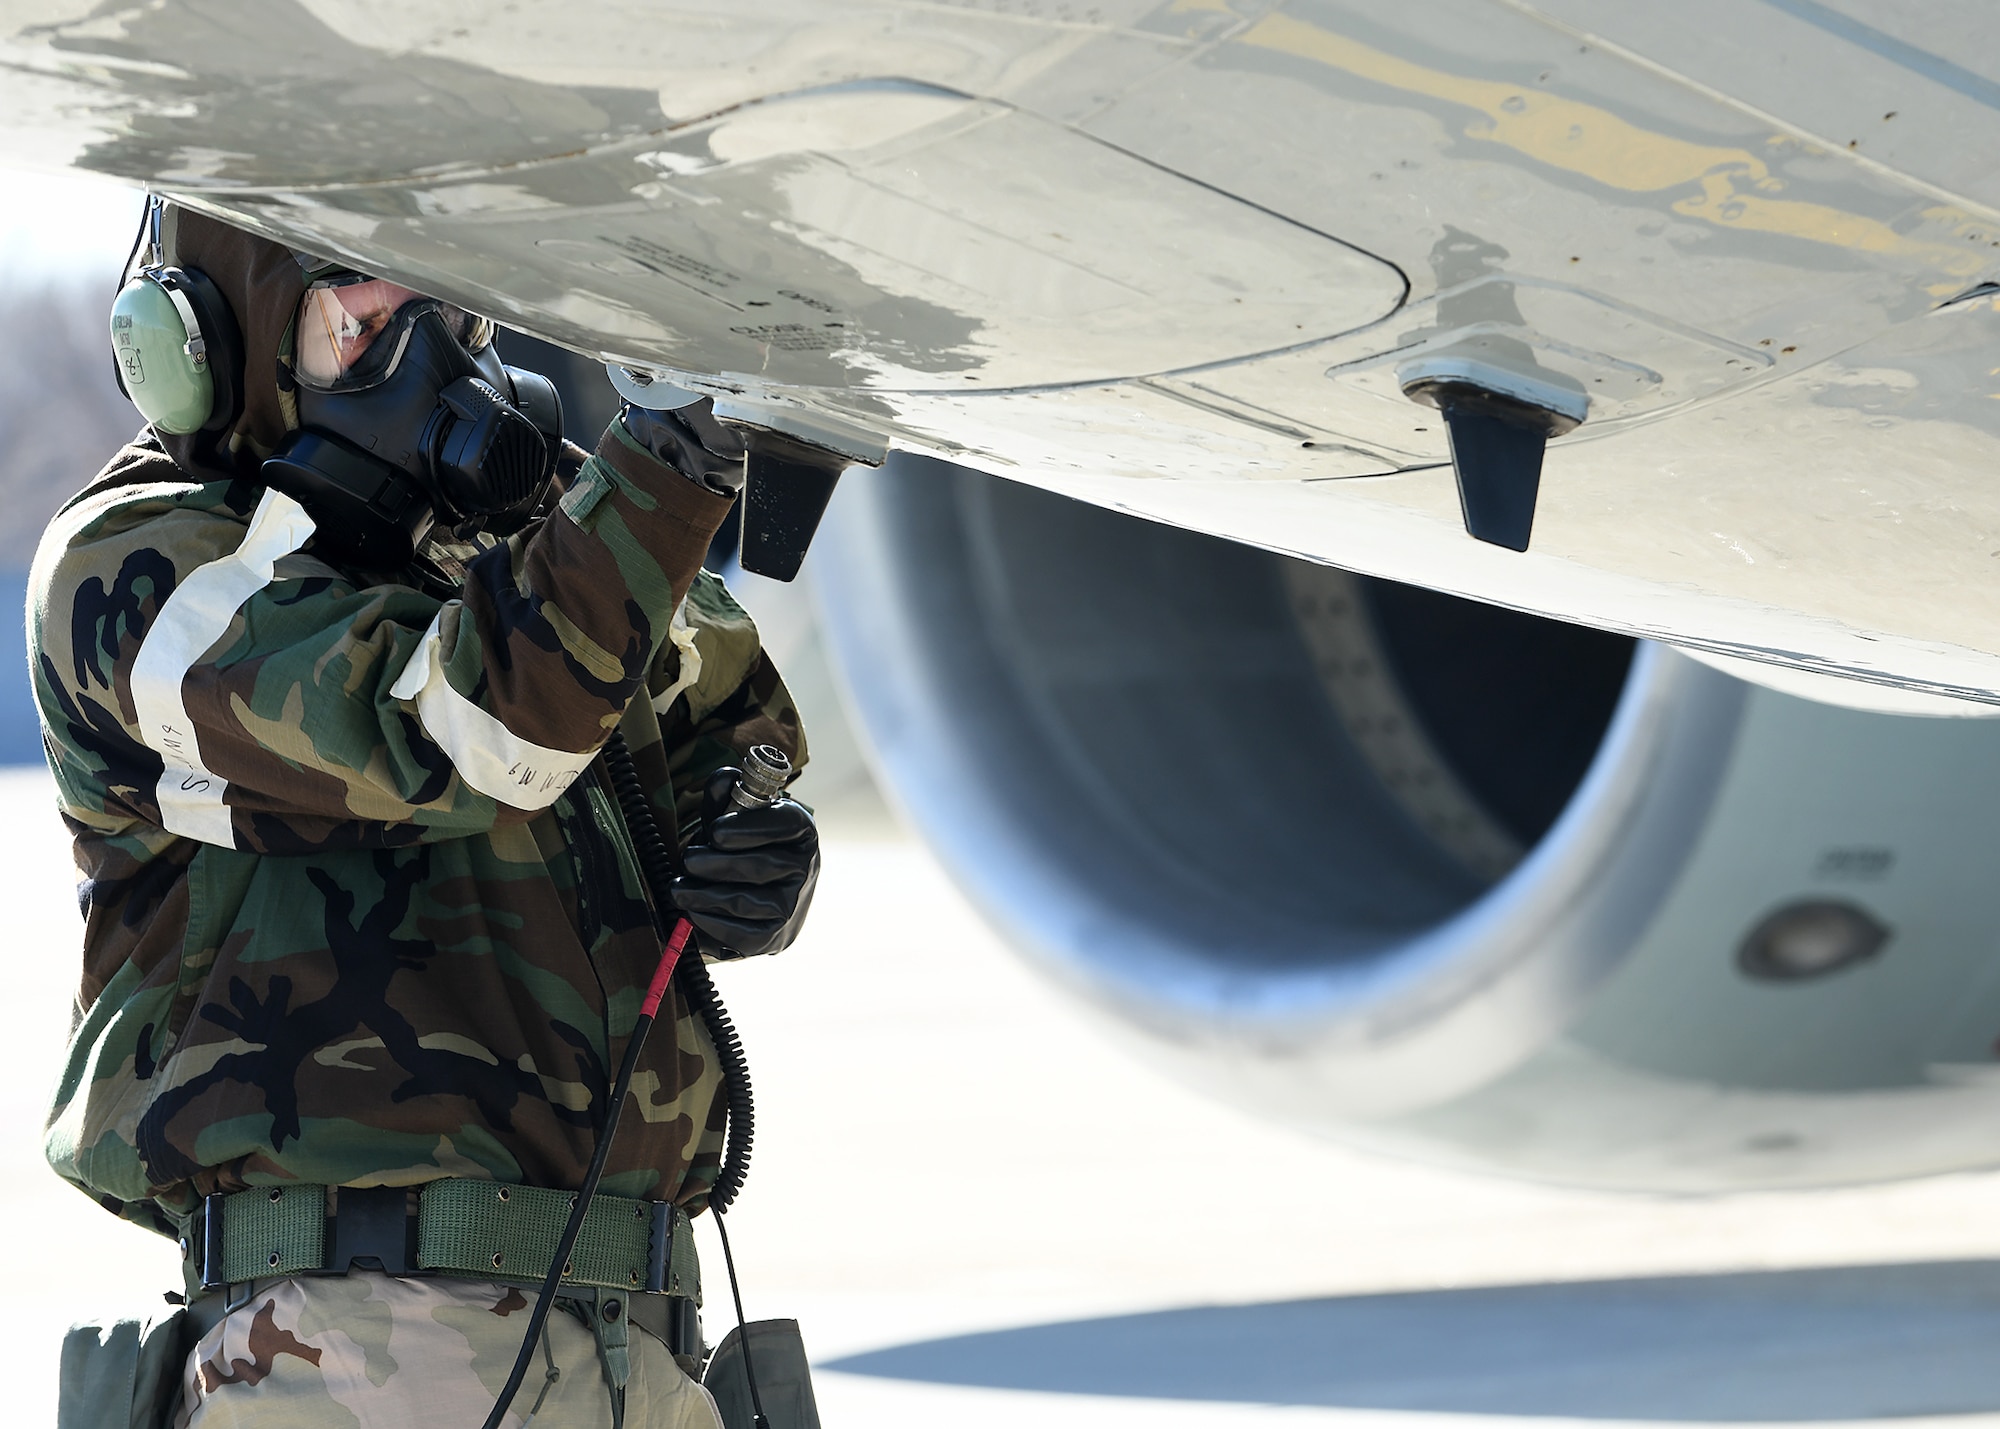 Airman in MOPP gear checks wing of aircraft